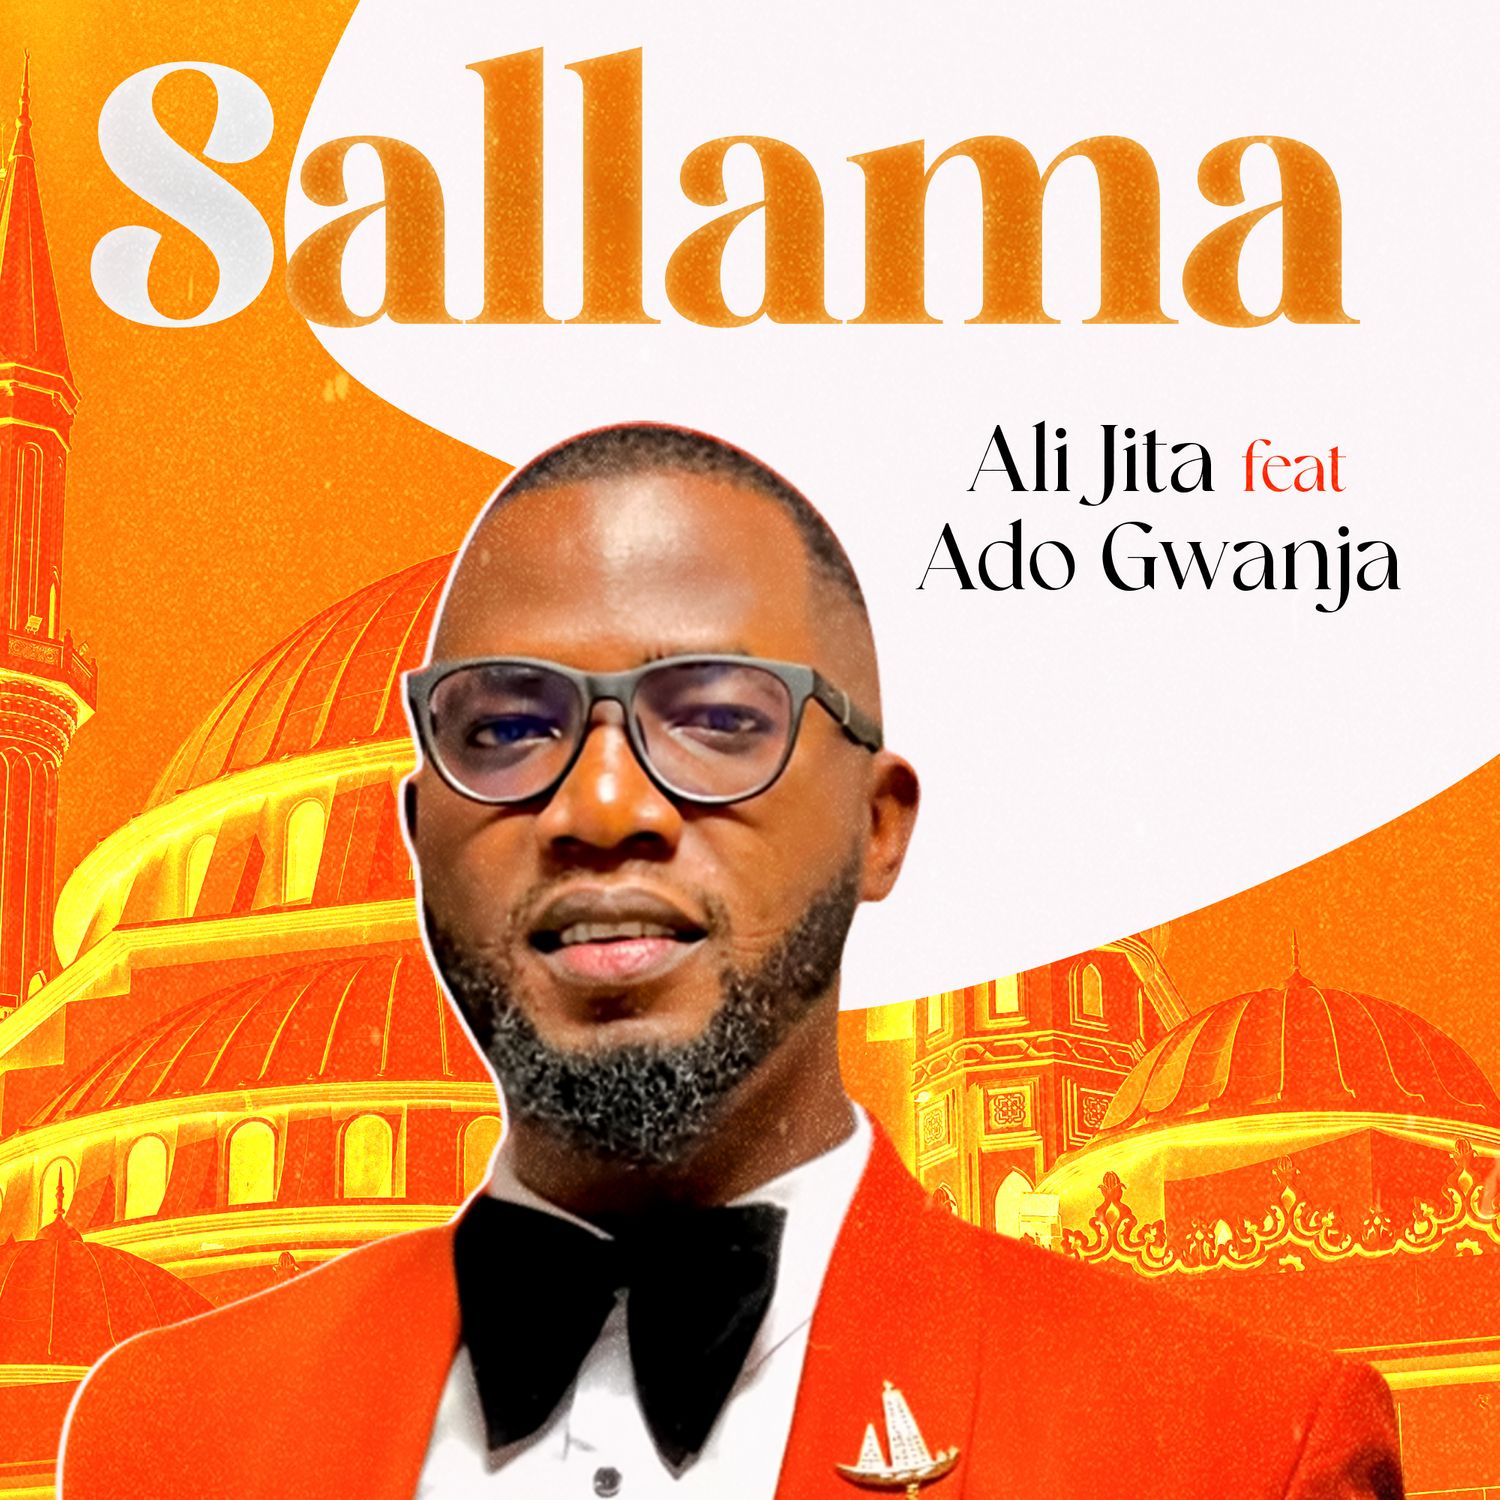 Ali Jita Sallama ft Ado Gwanja Mp3 Download